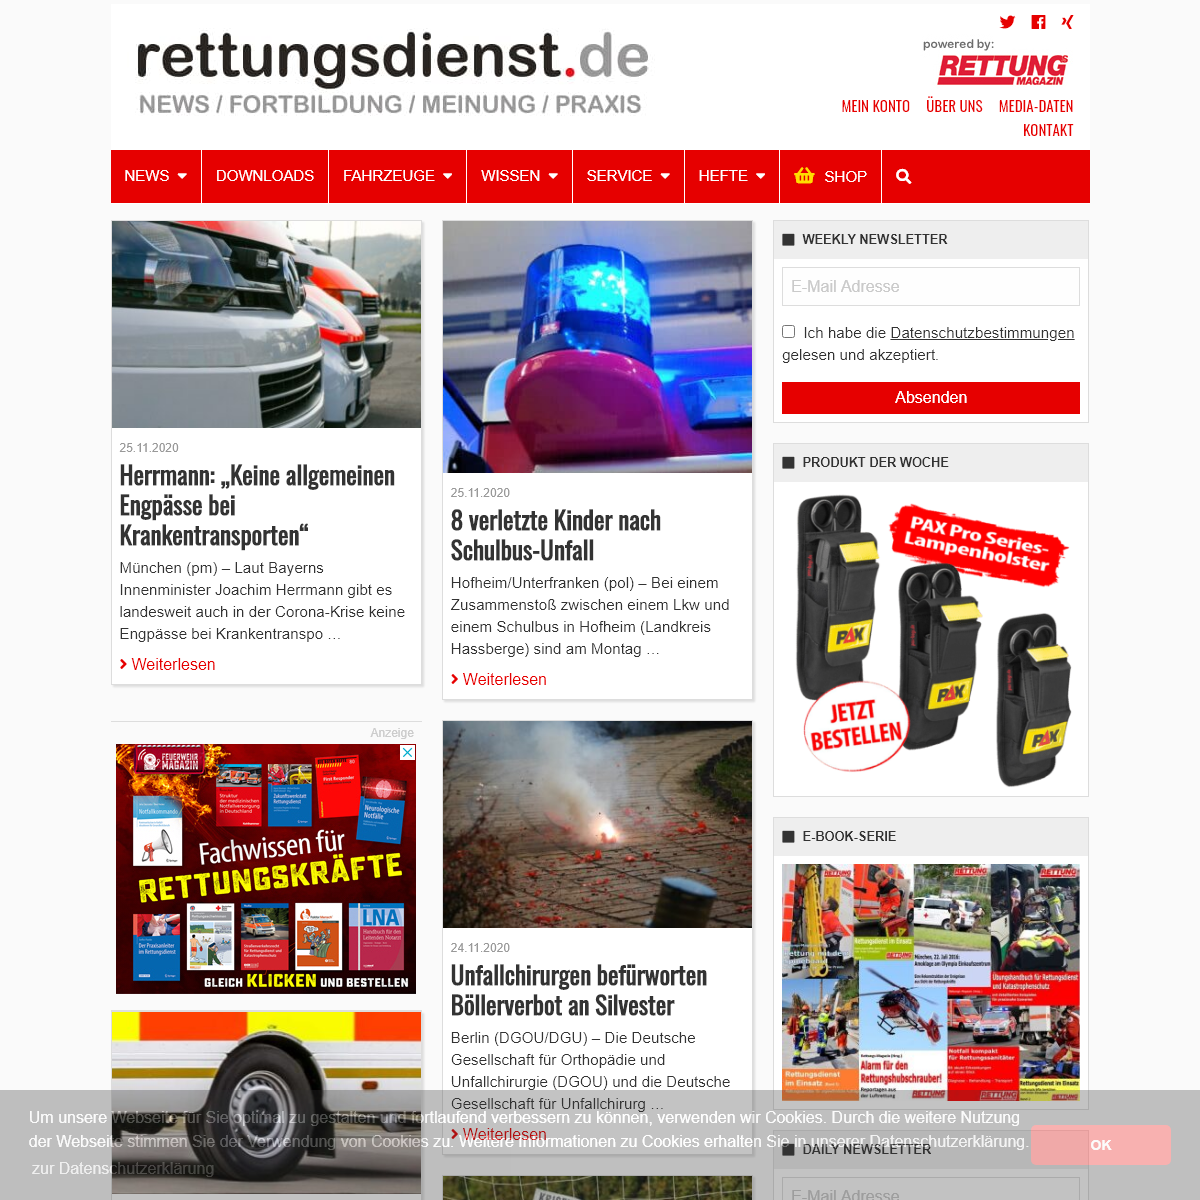 A complete backup of rettungsdienst.de